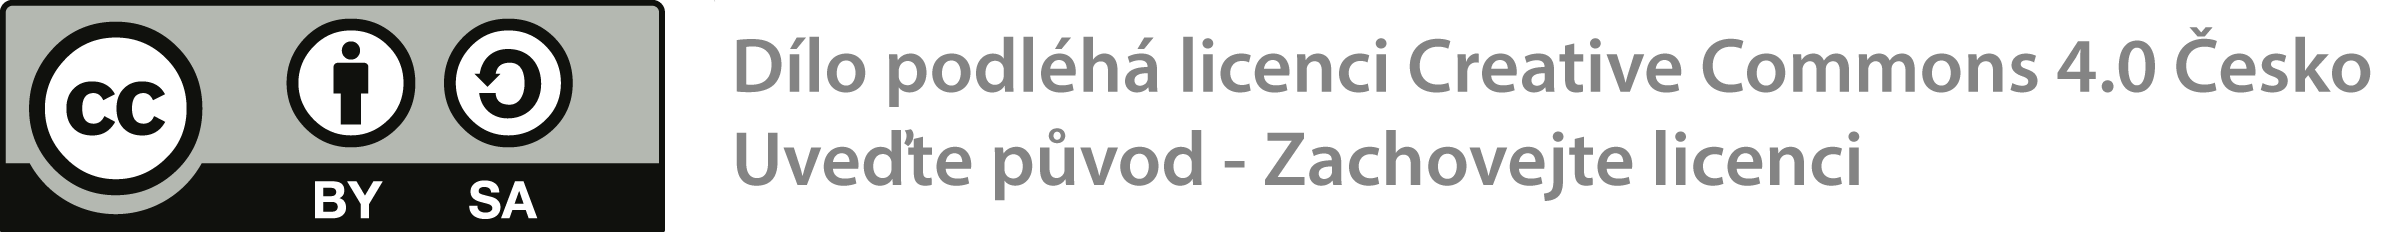 Licence CC BY SA